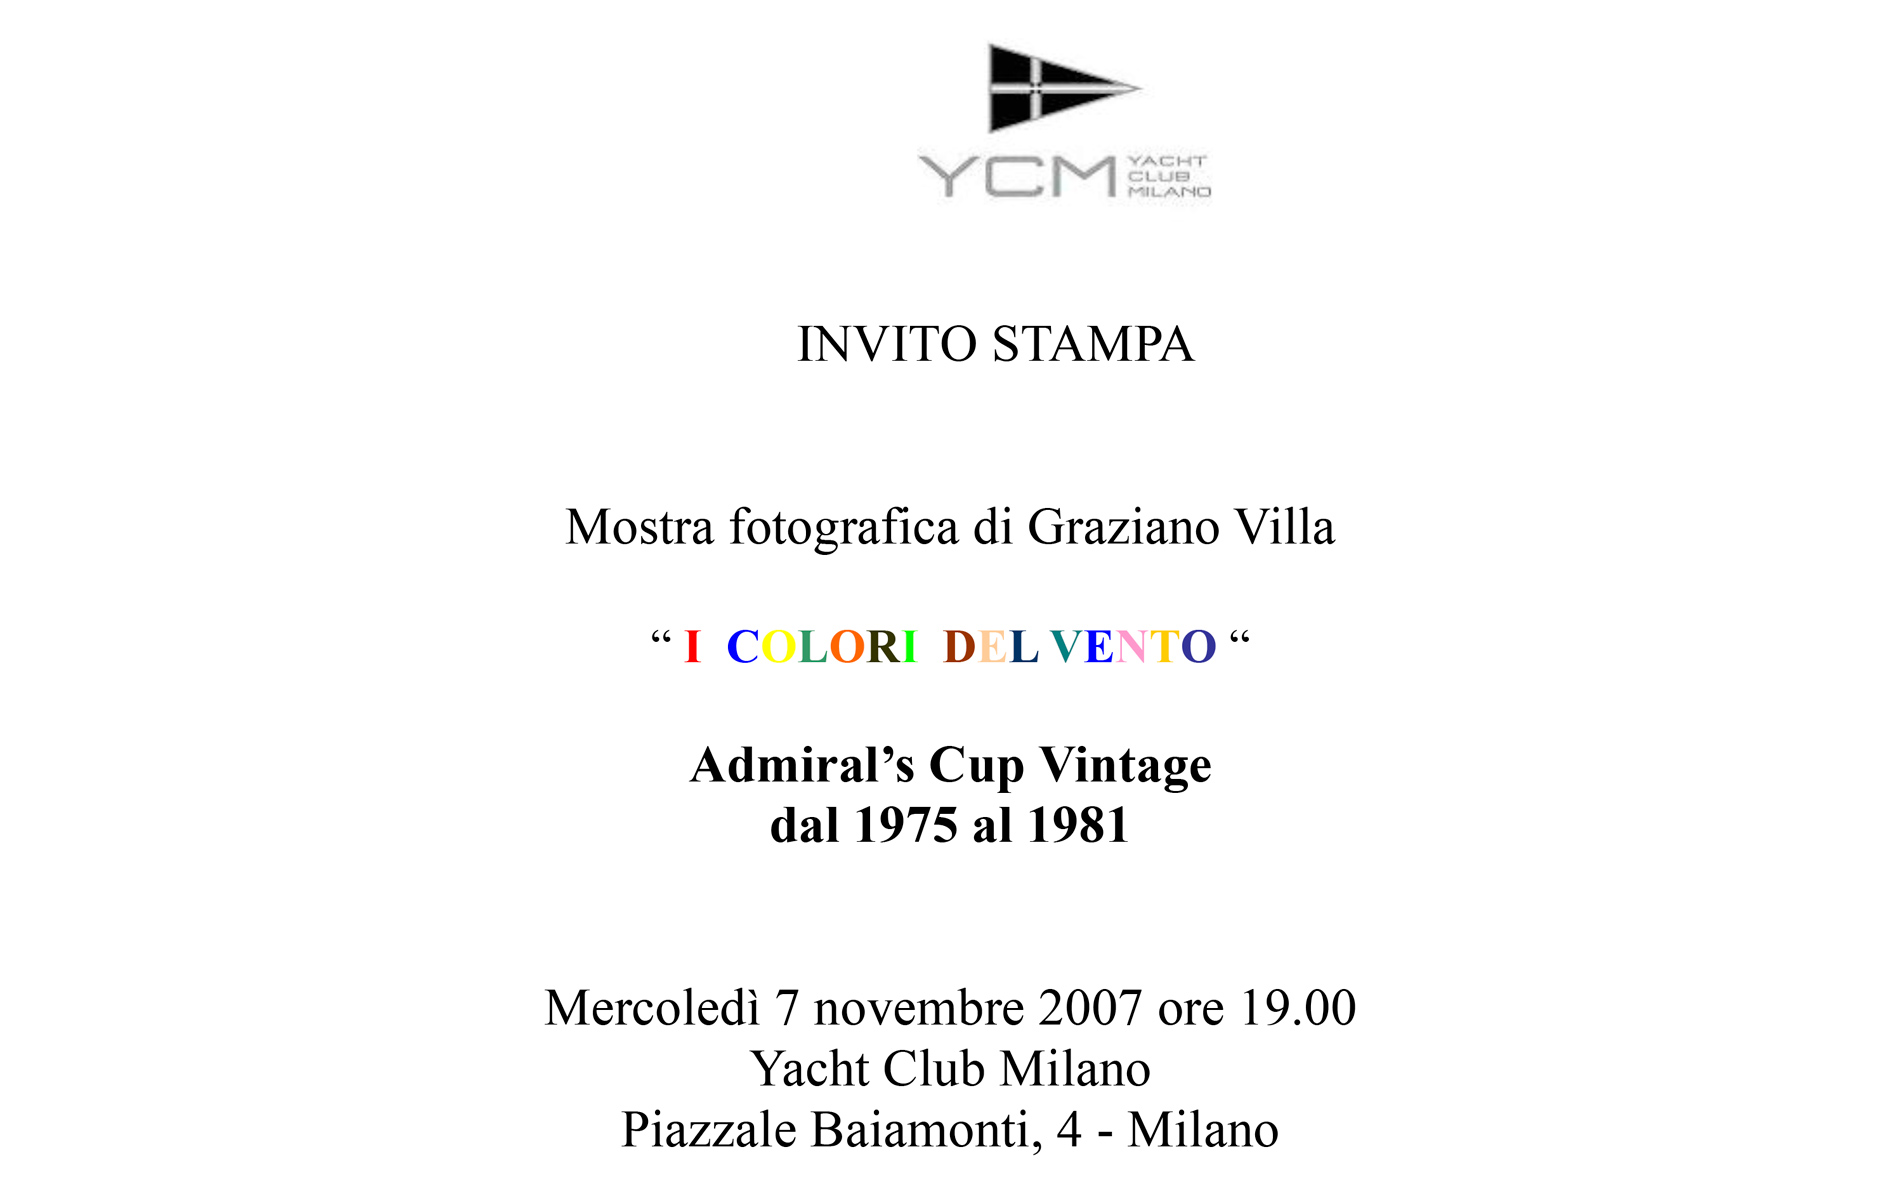 ADMIRAL'S CUP VINTAGE - © Graziano Villa